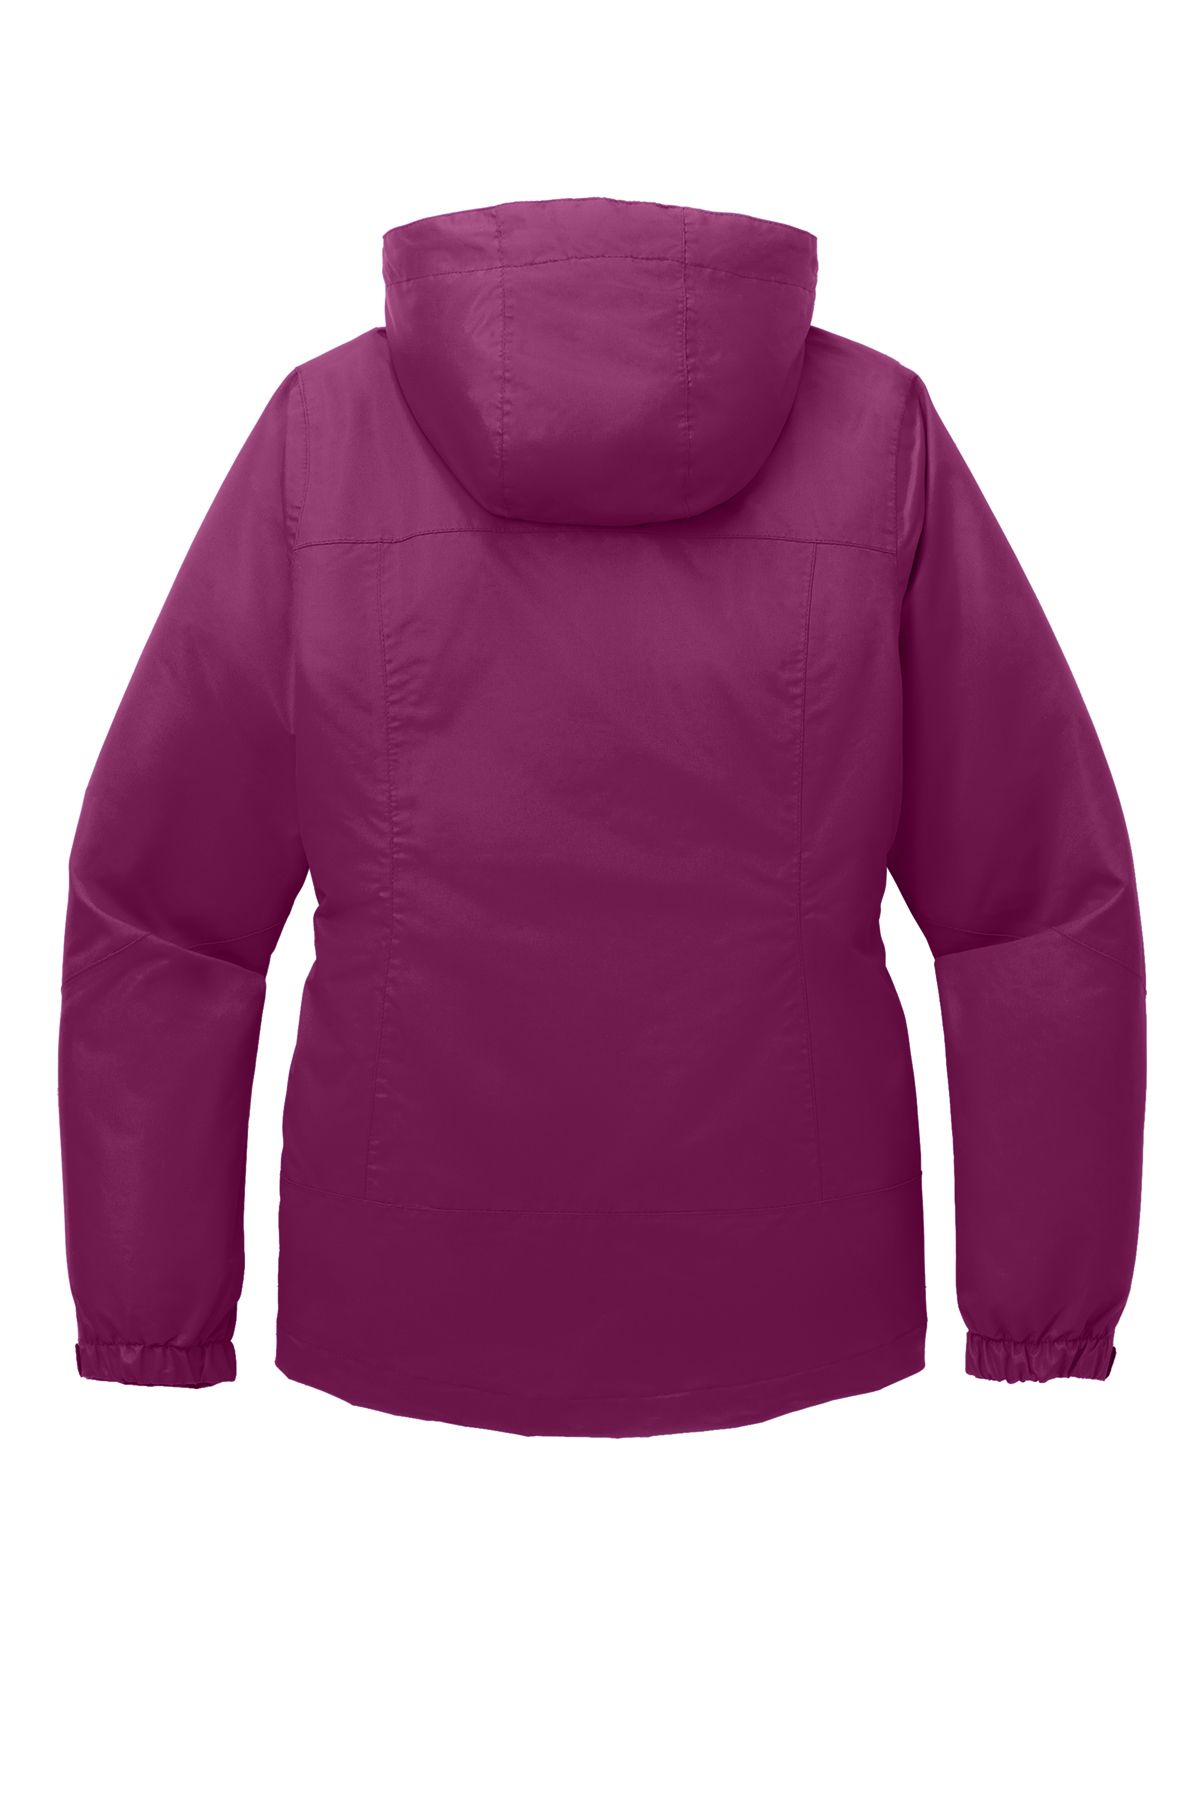 Port Authority Ladies Vortex Jacket Waterproof | Product 3-in-1 | SanMar